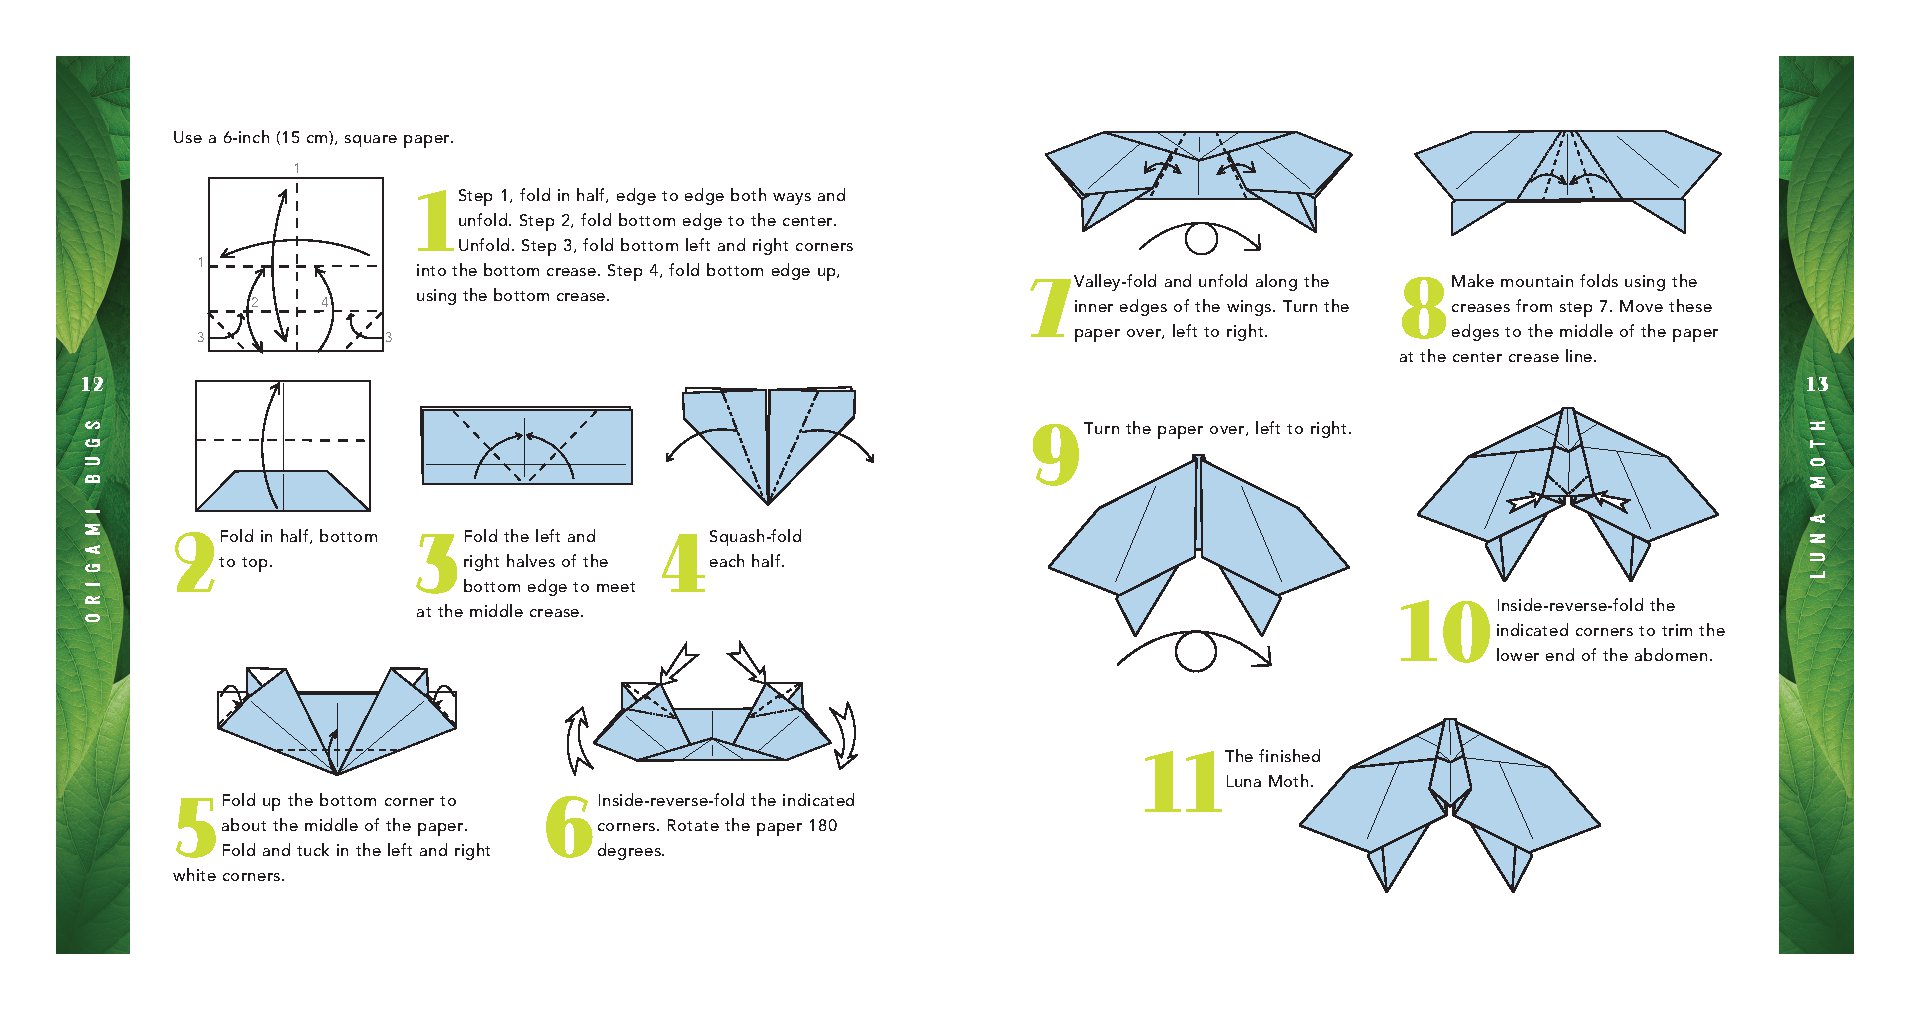 Origami Bugs Kit